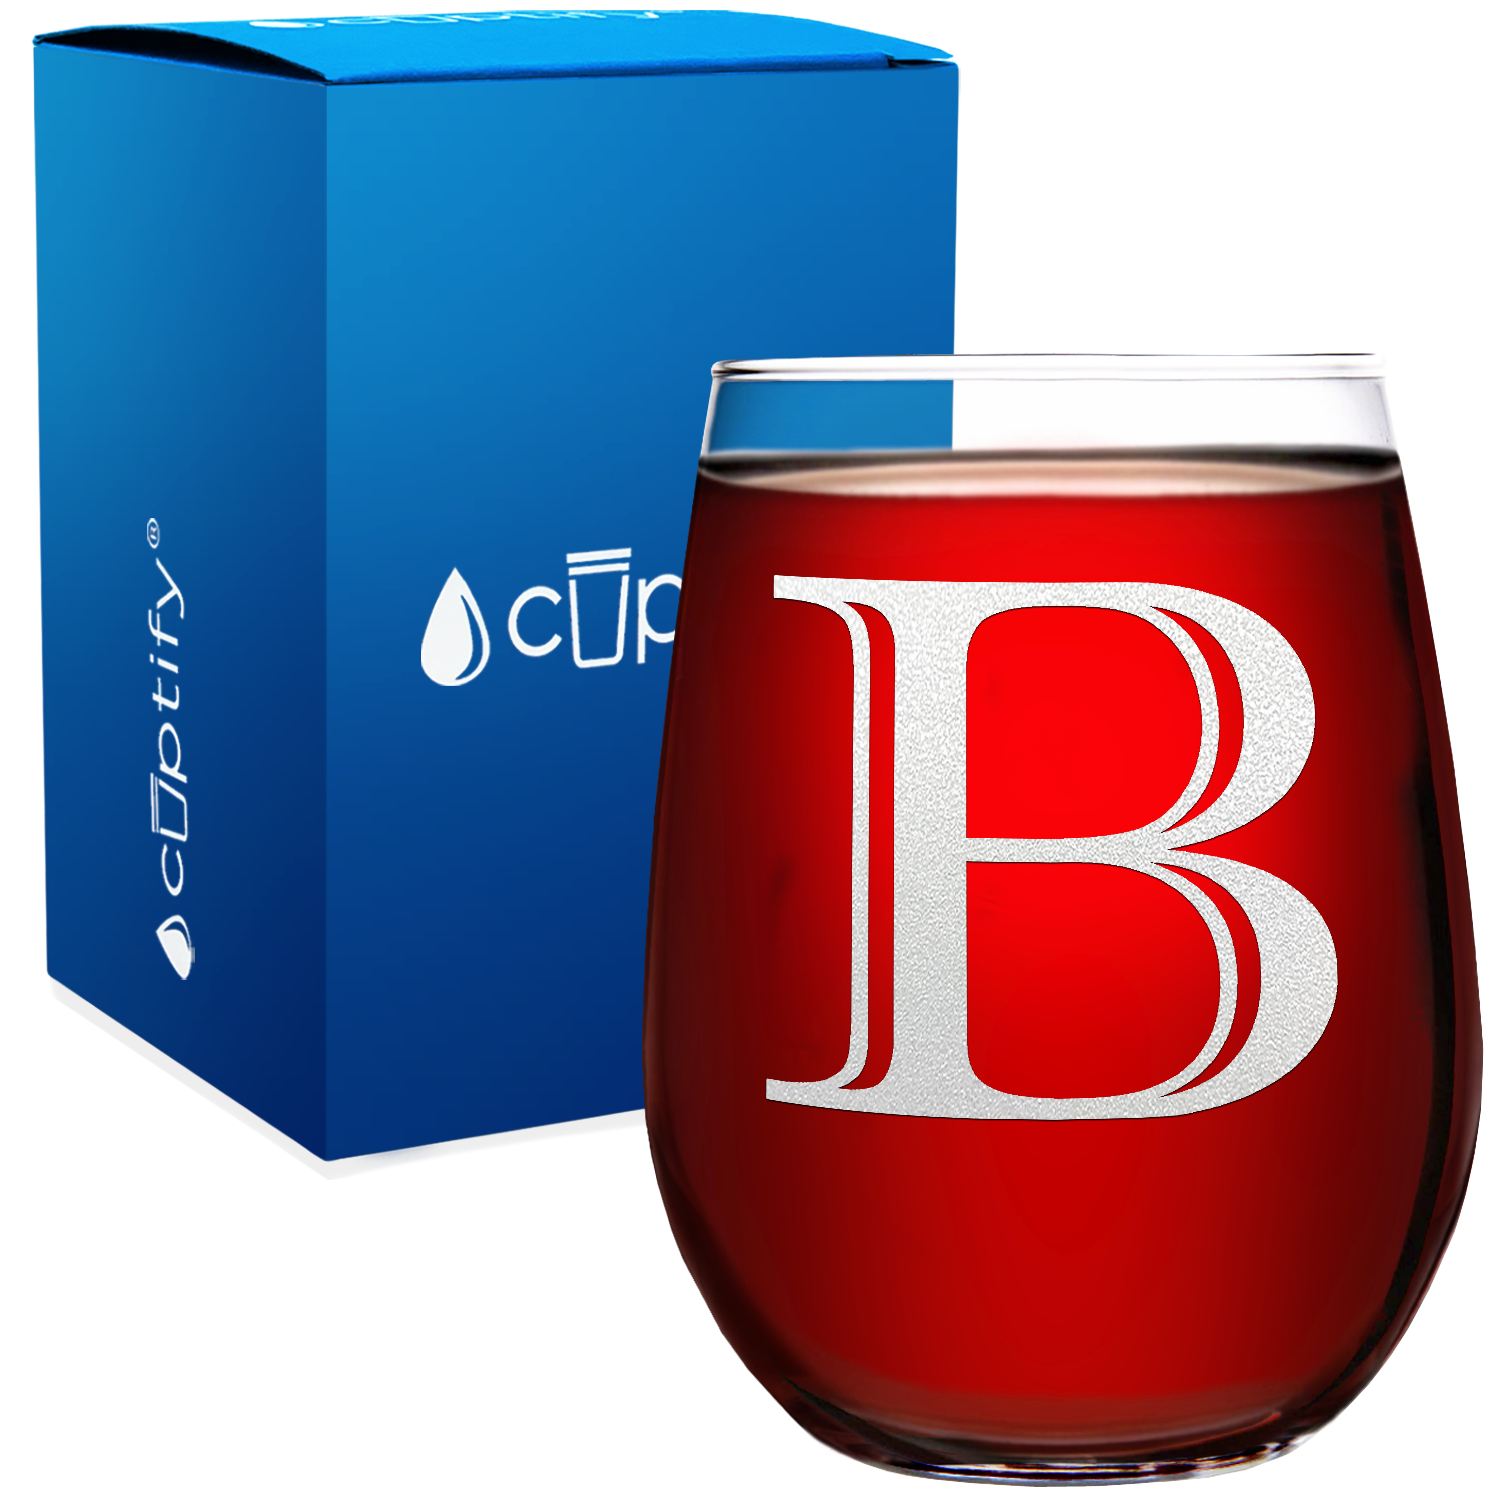 Monogram Initial Letter B 17oz Stemless Wine Glass